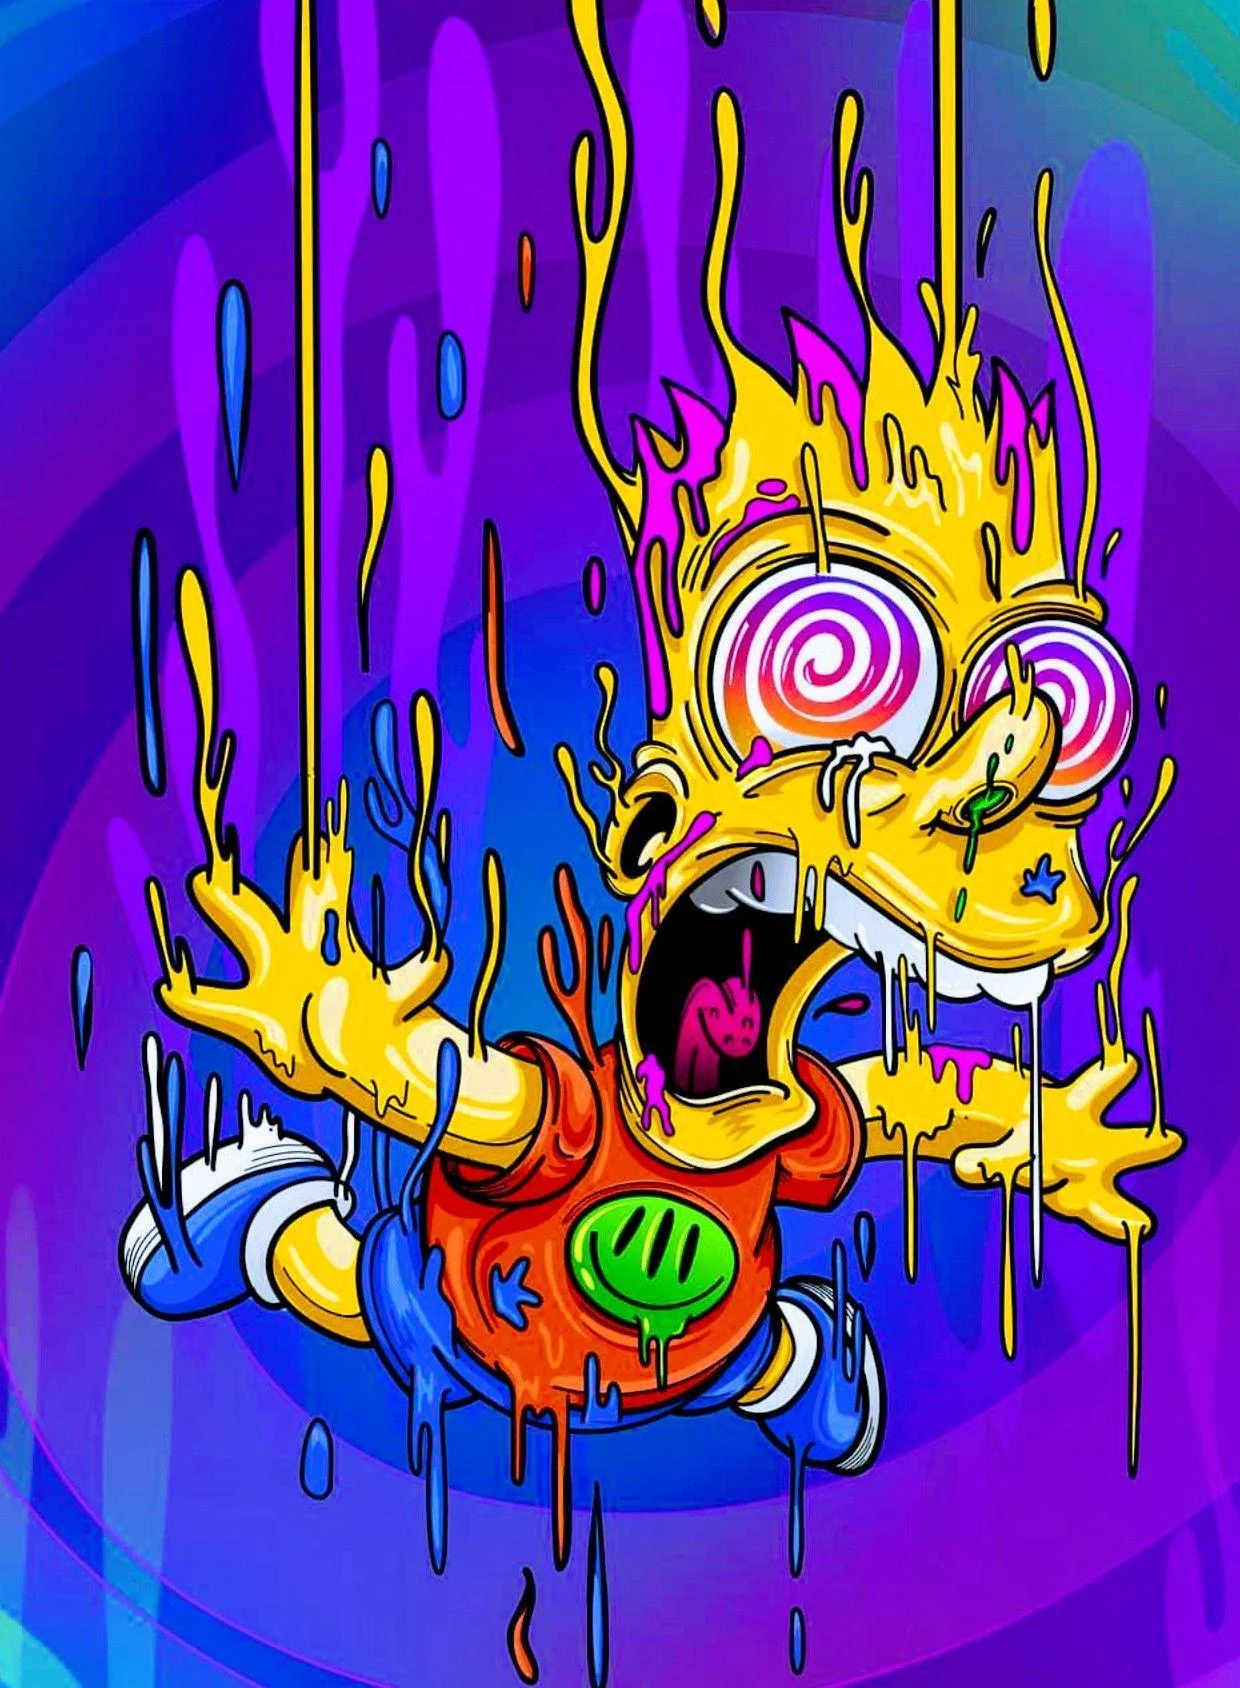 Background Bart Simpson Wallpaper